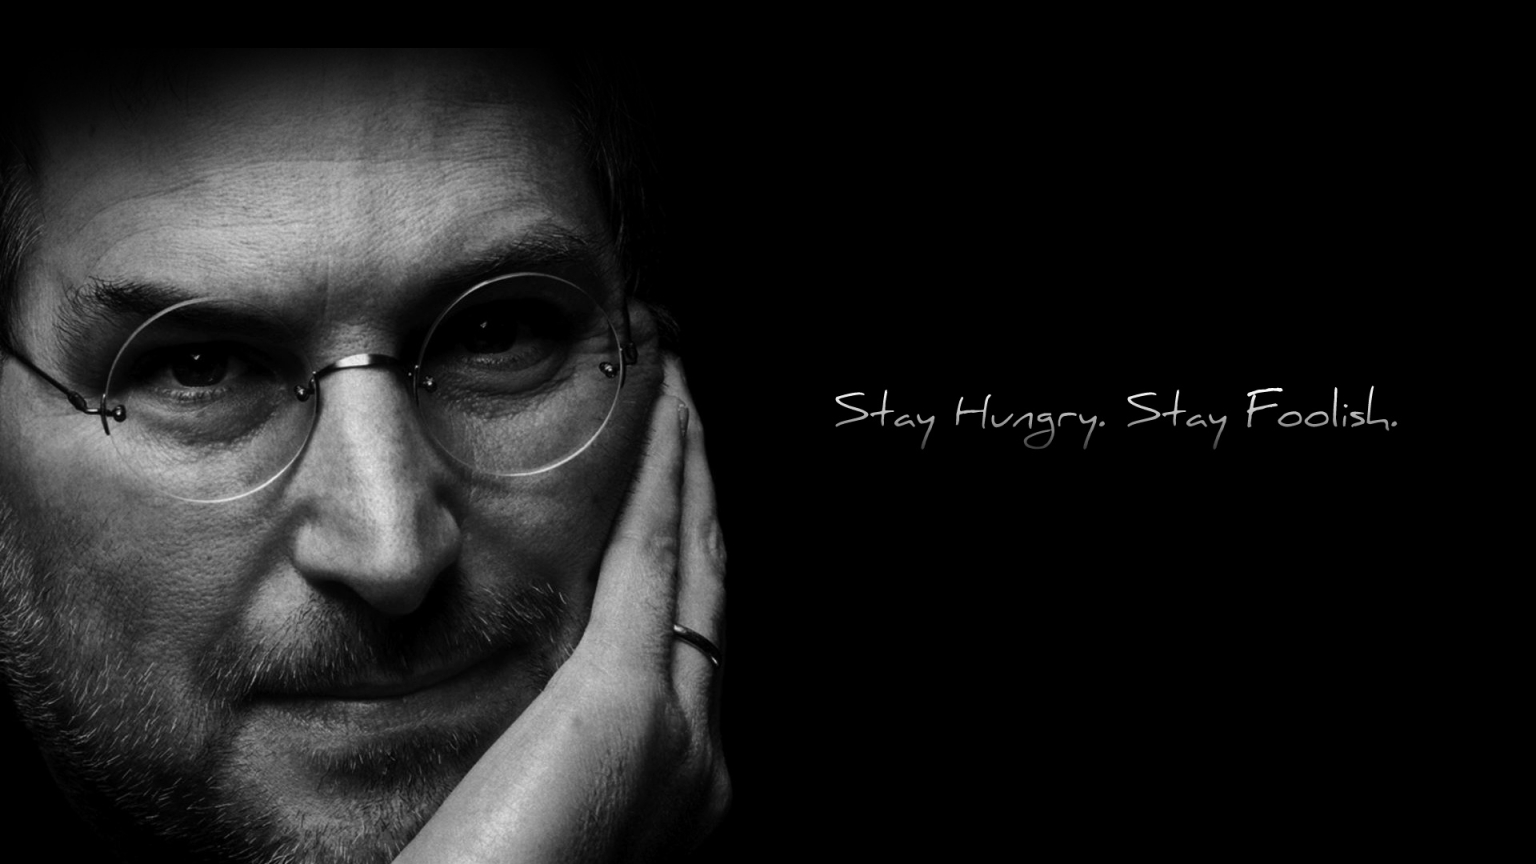 Steve Jobs Quote for 1536 x 864 HDTV resolution